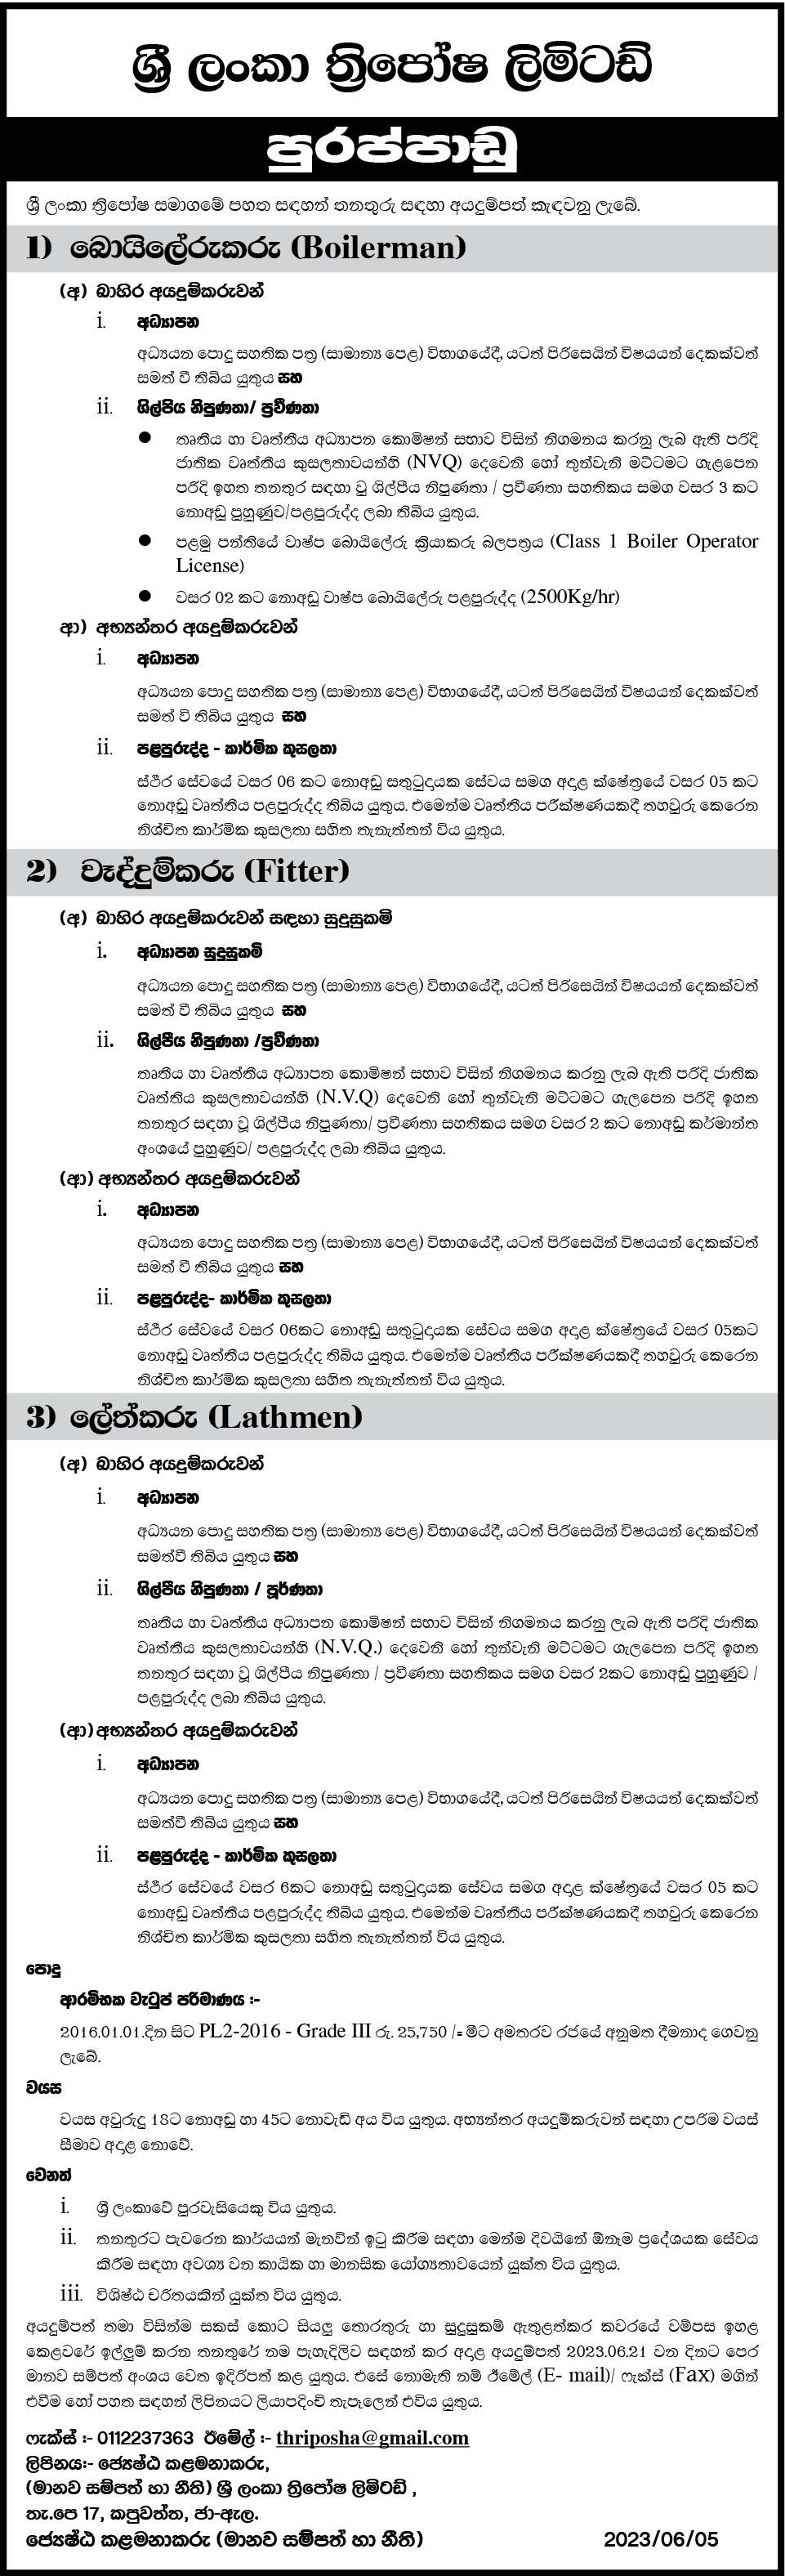 Boilerman, Fitter, Lathmen - Sri Lanka Thriposha Limited